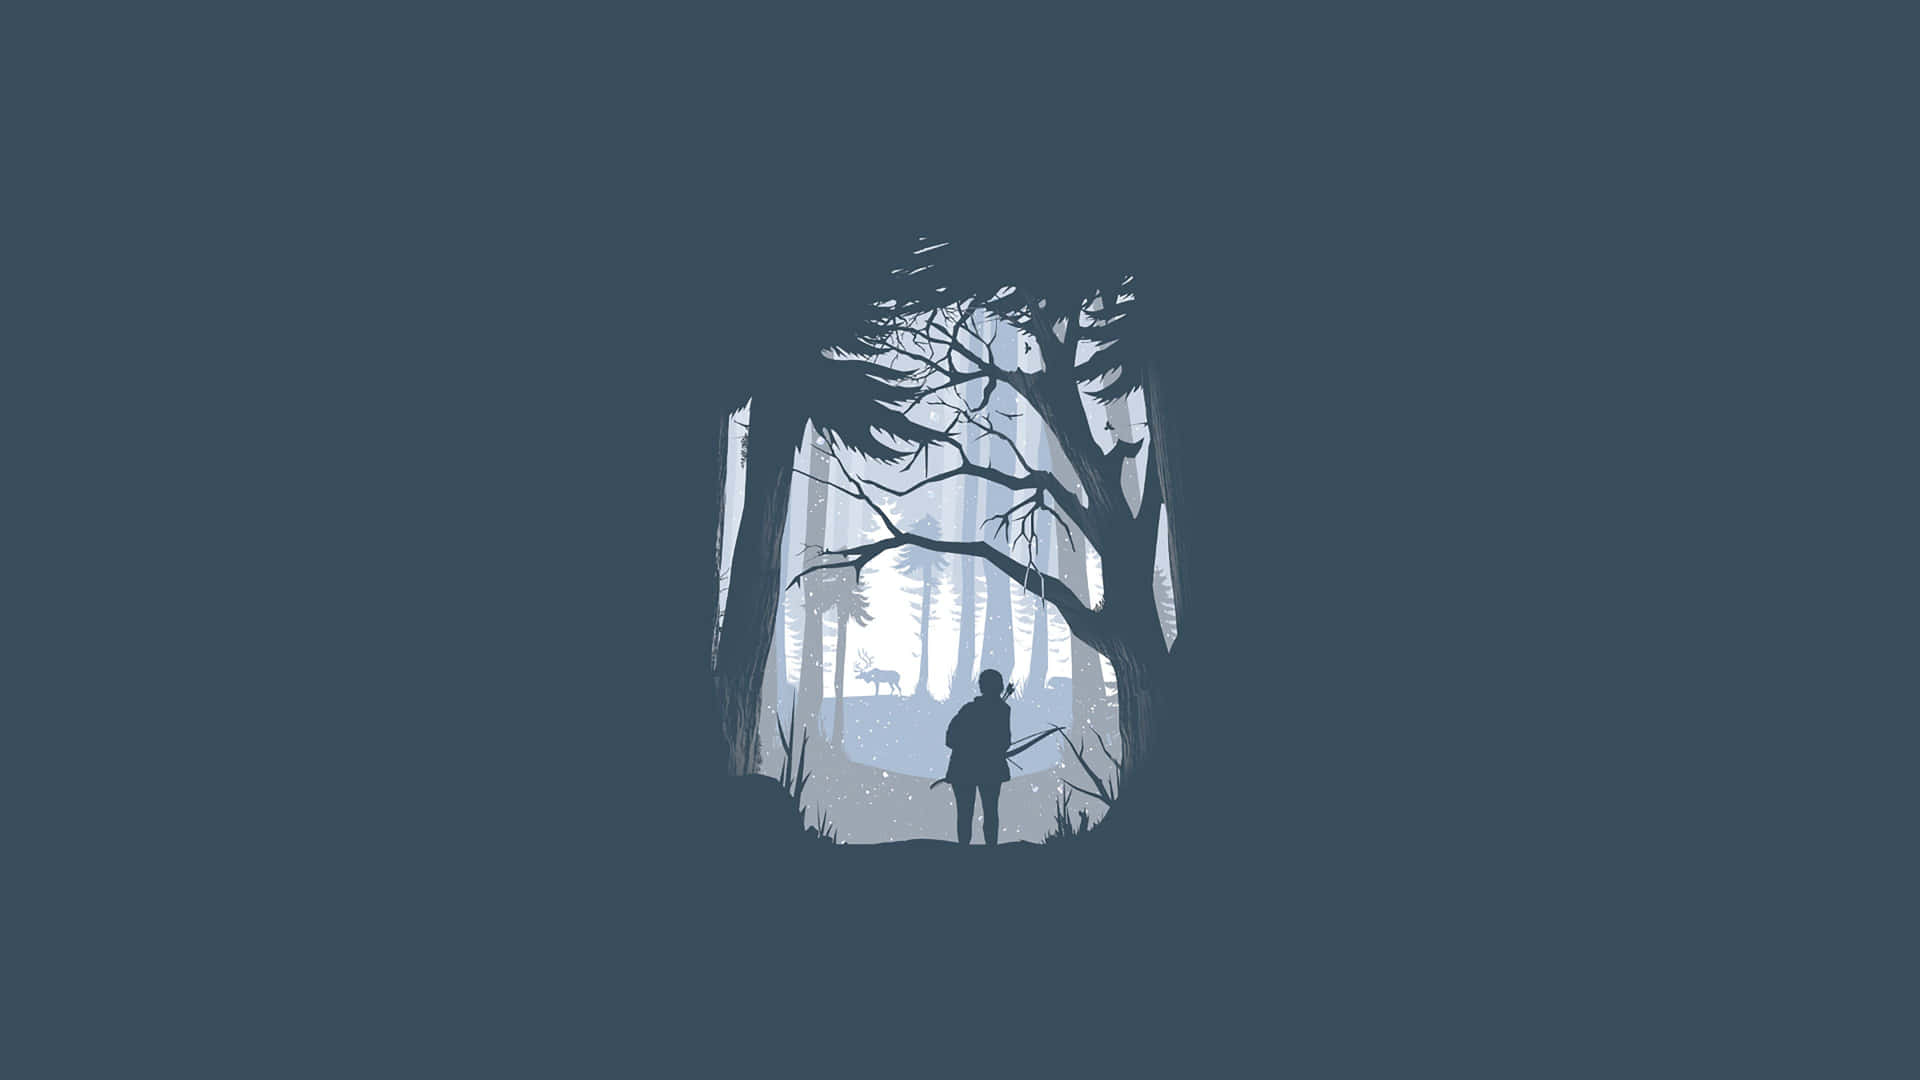 4k Minimal Man In Forest Silhouette Wallpaper